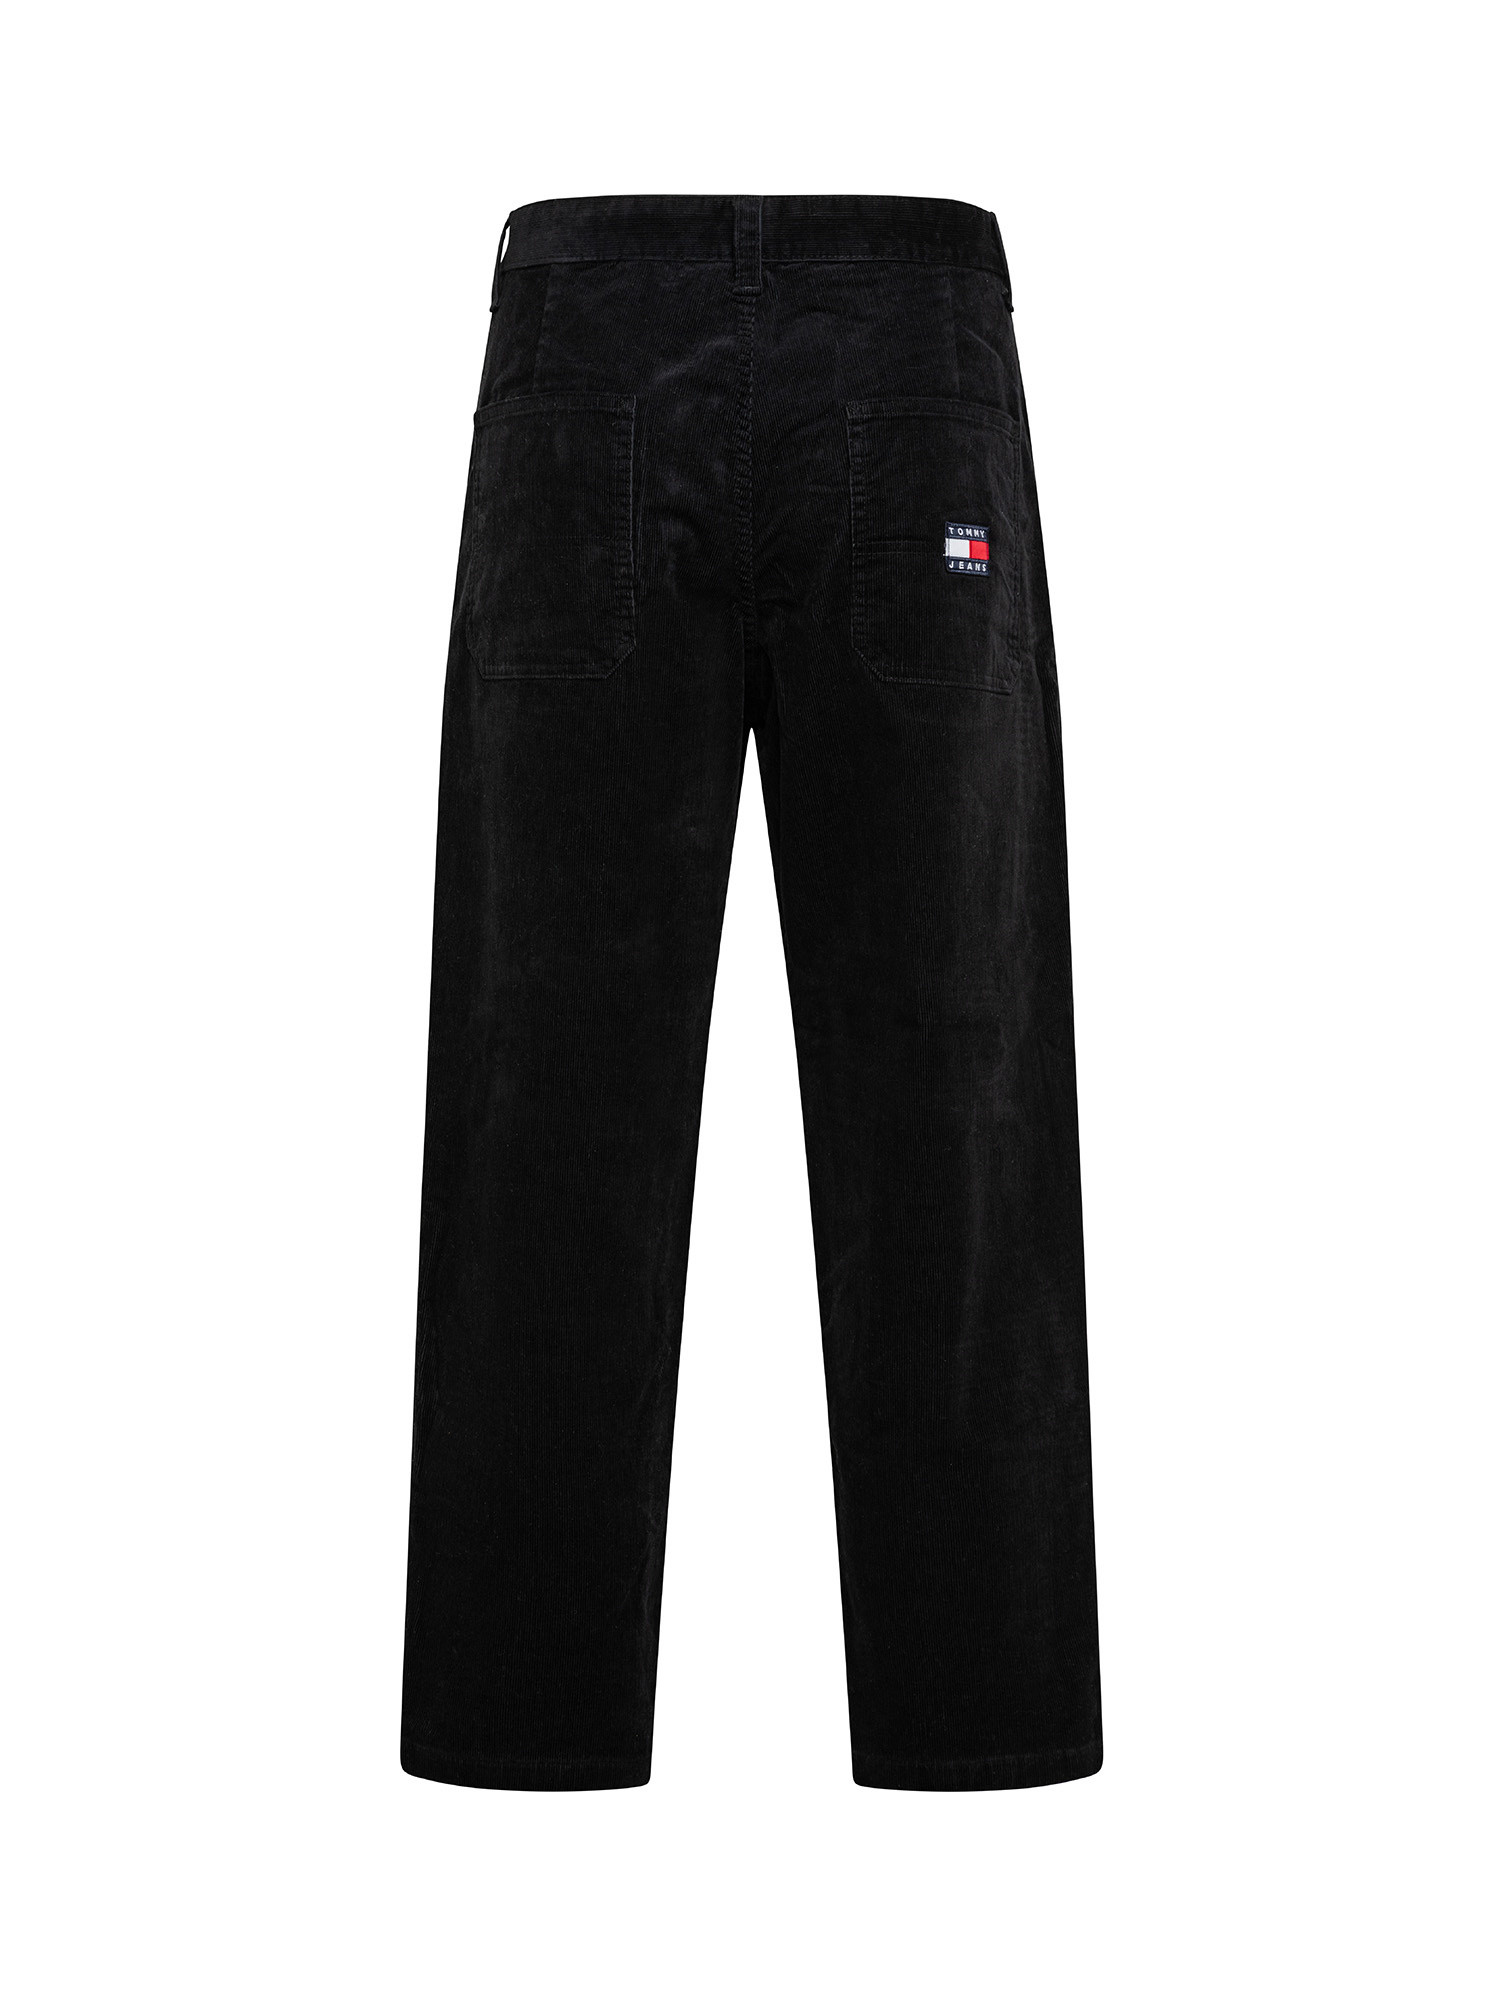 Chino pants in corduroy, Black, large image number 1